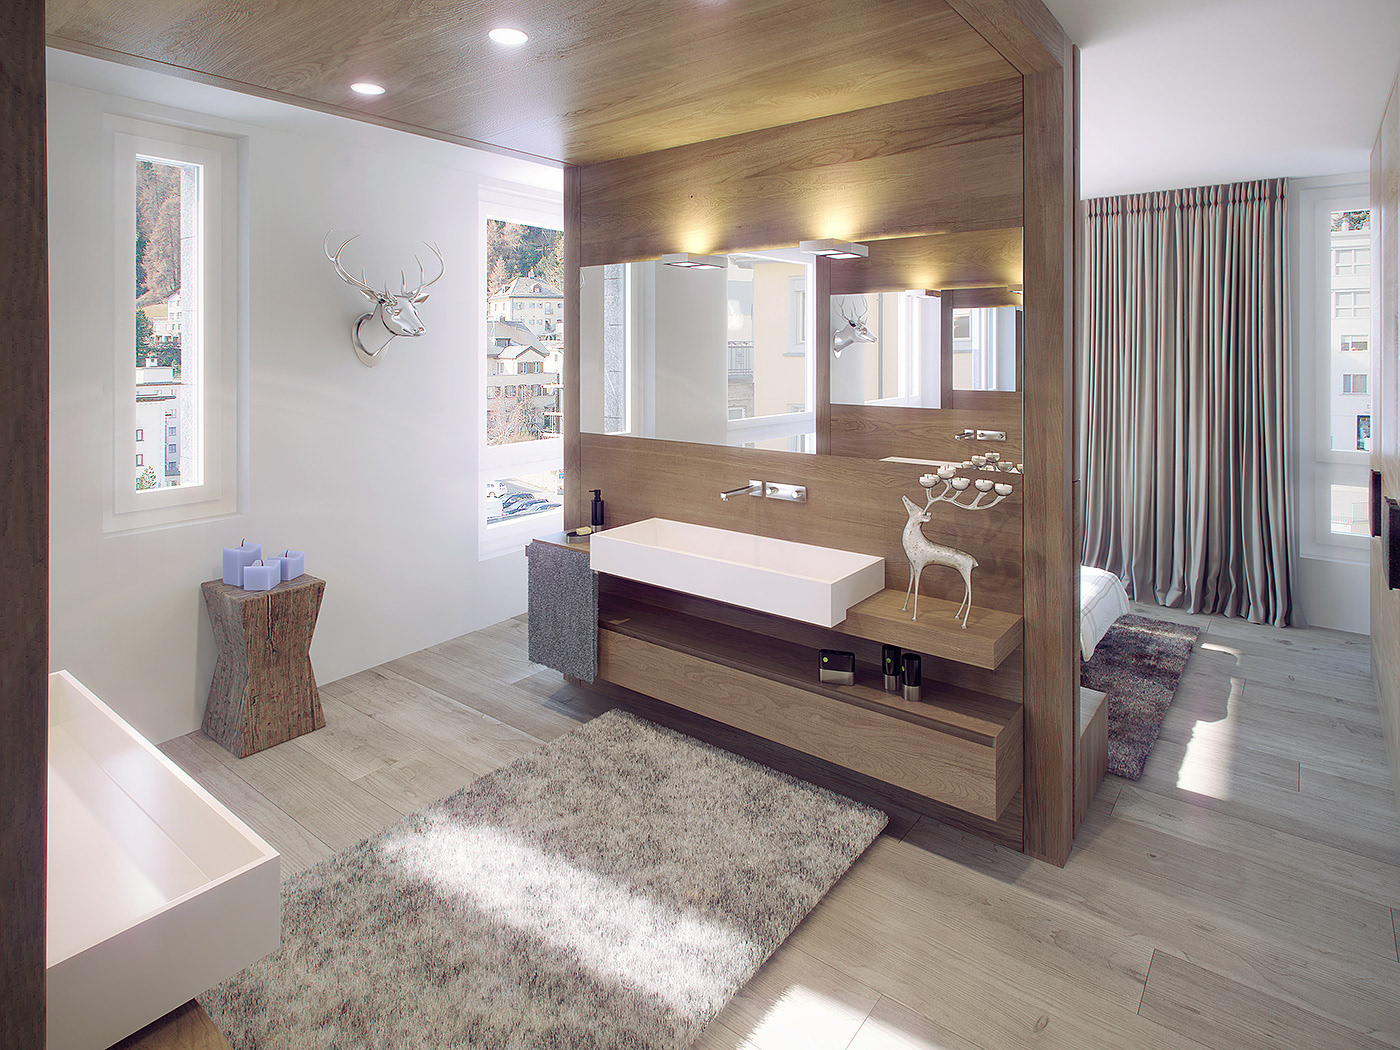 3D CGI visual warm St. Moritz apartments highclass expensive wood graphics